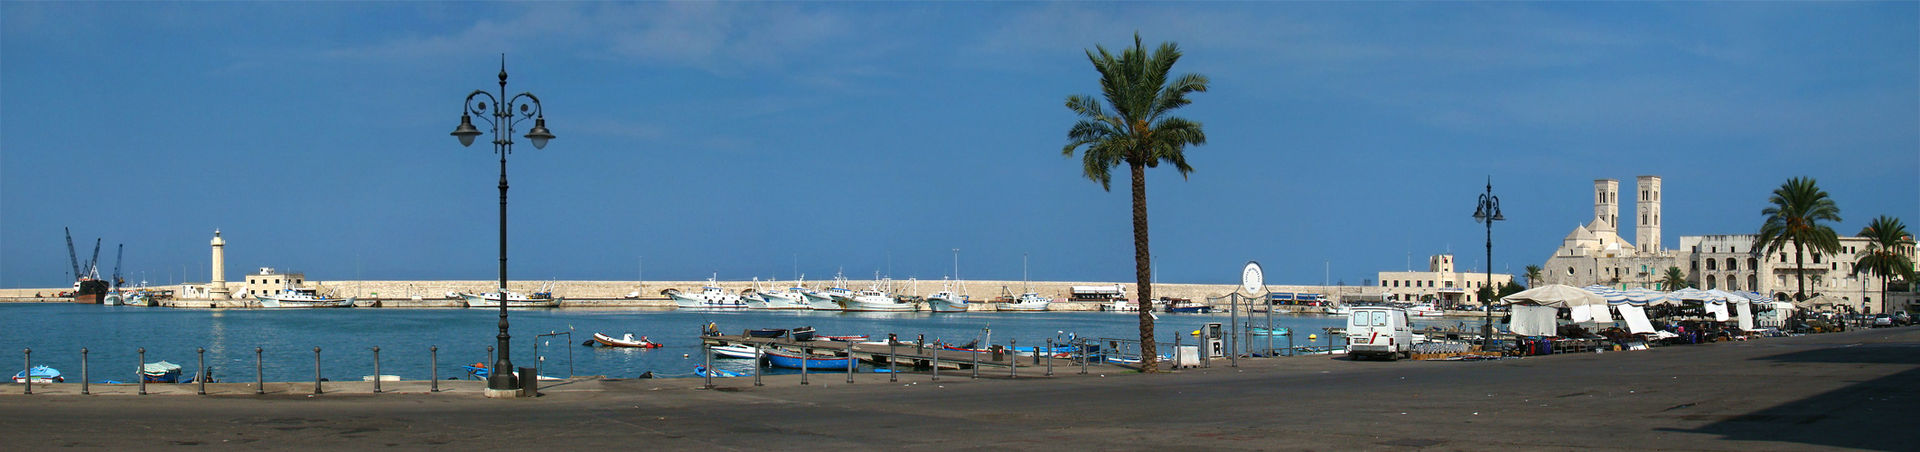 De haven van Molfetta (Foto: WikiCommons/Tango7174)